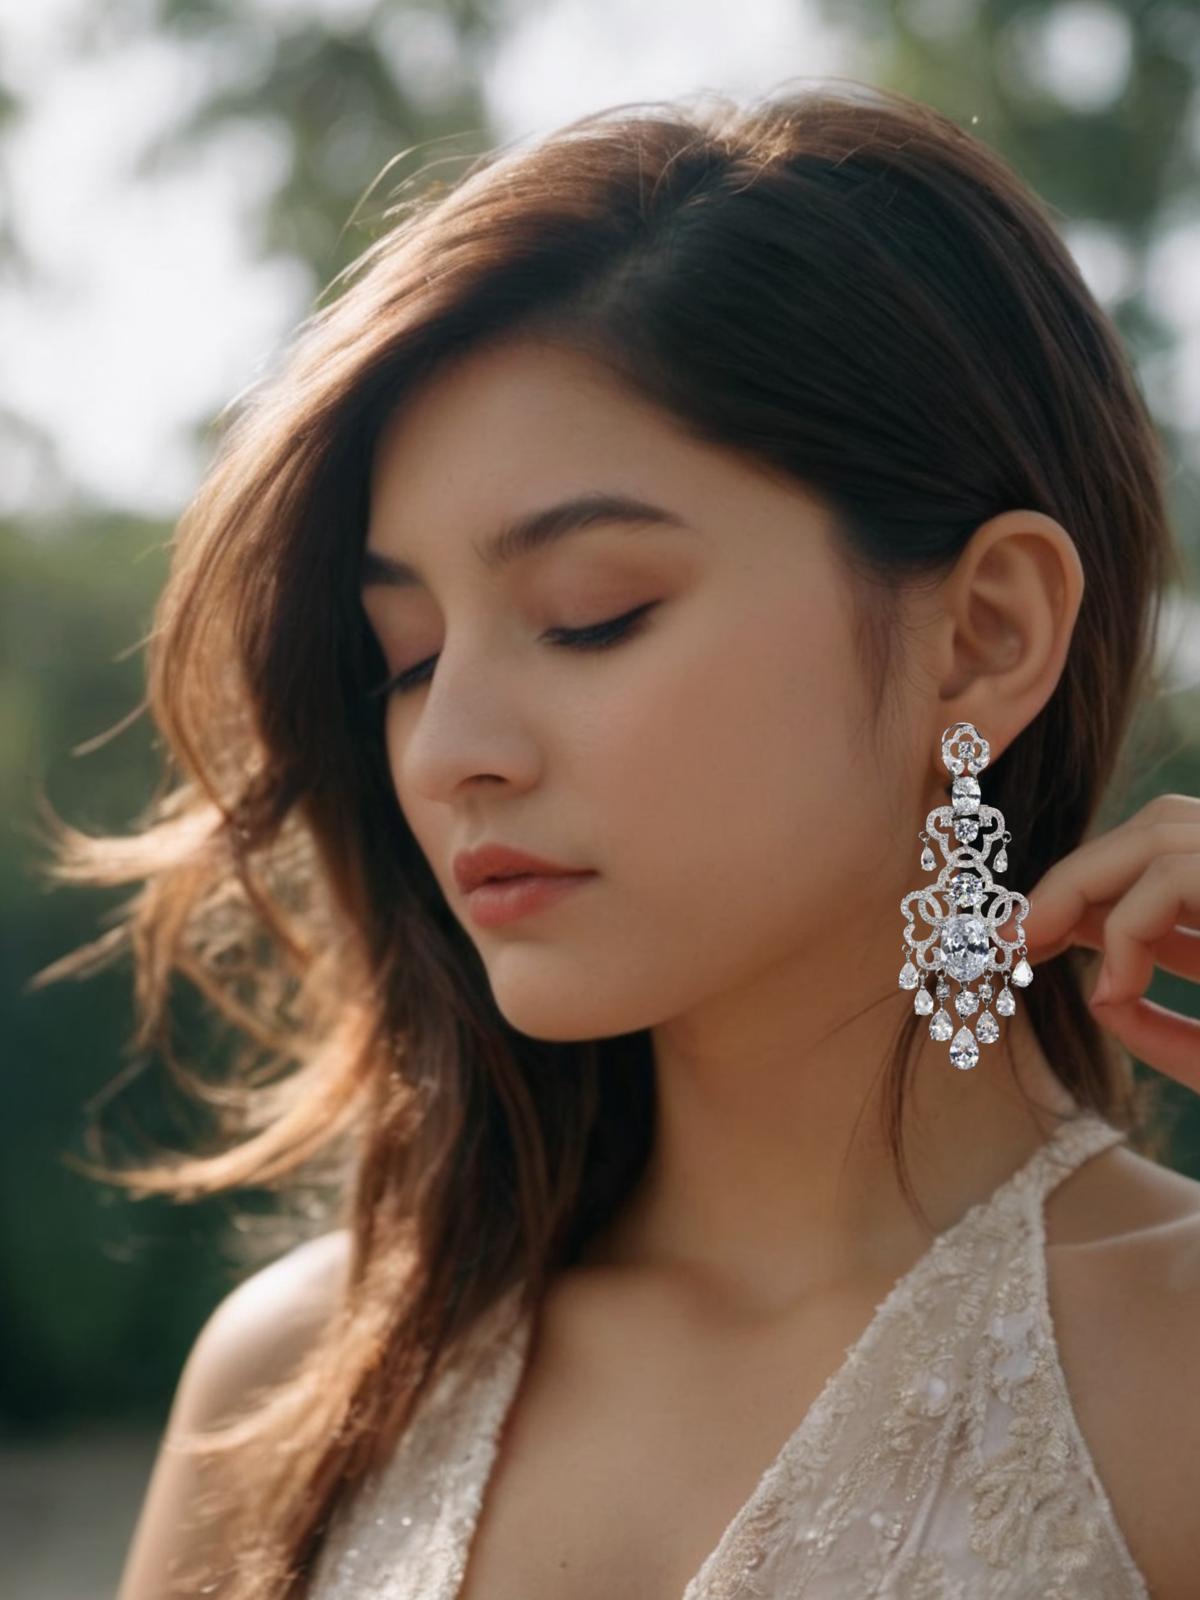 Gorgeous Zircon Princess drop earrings